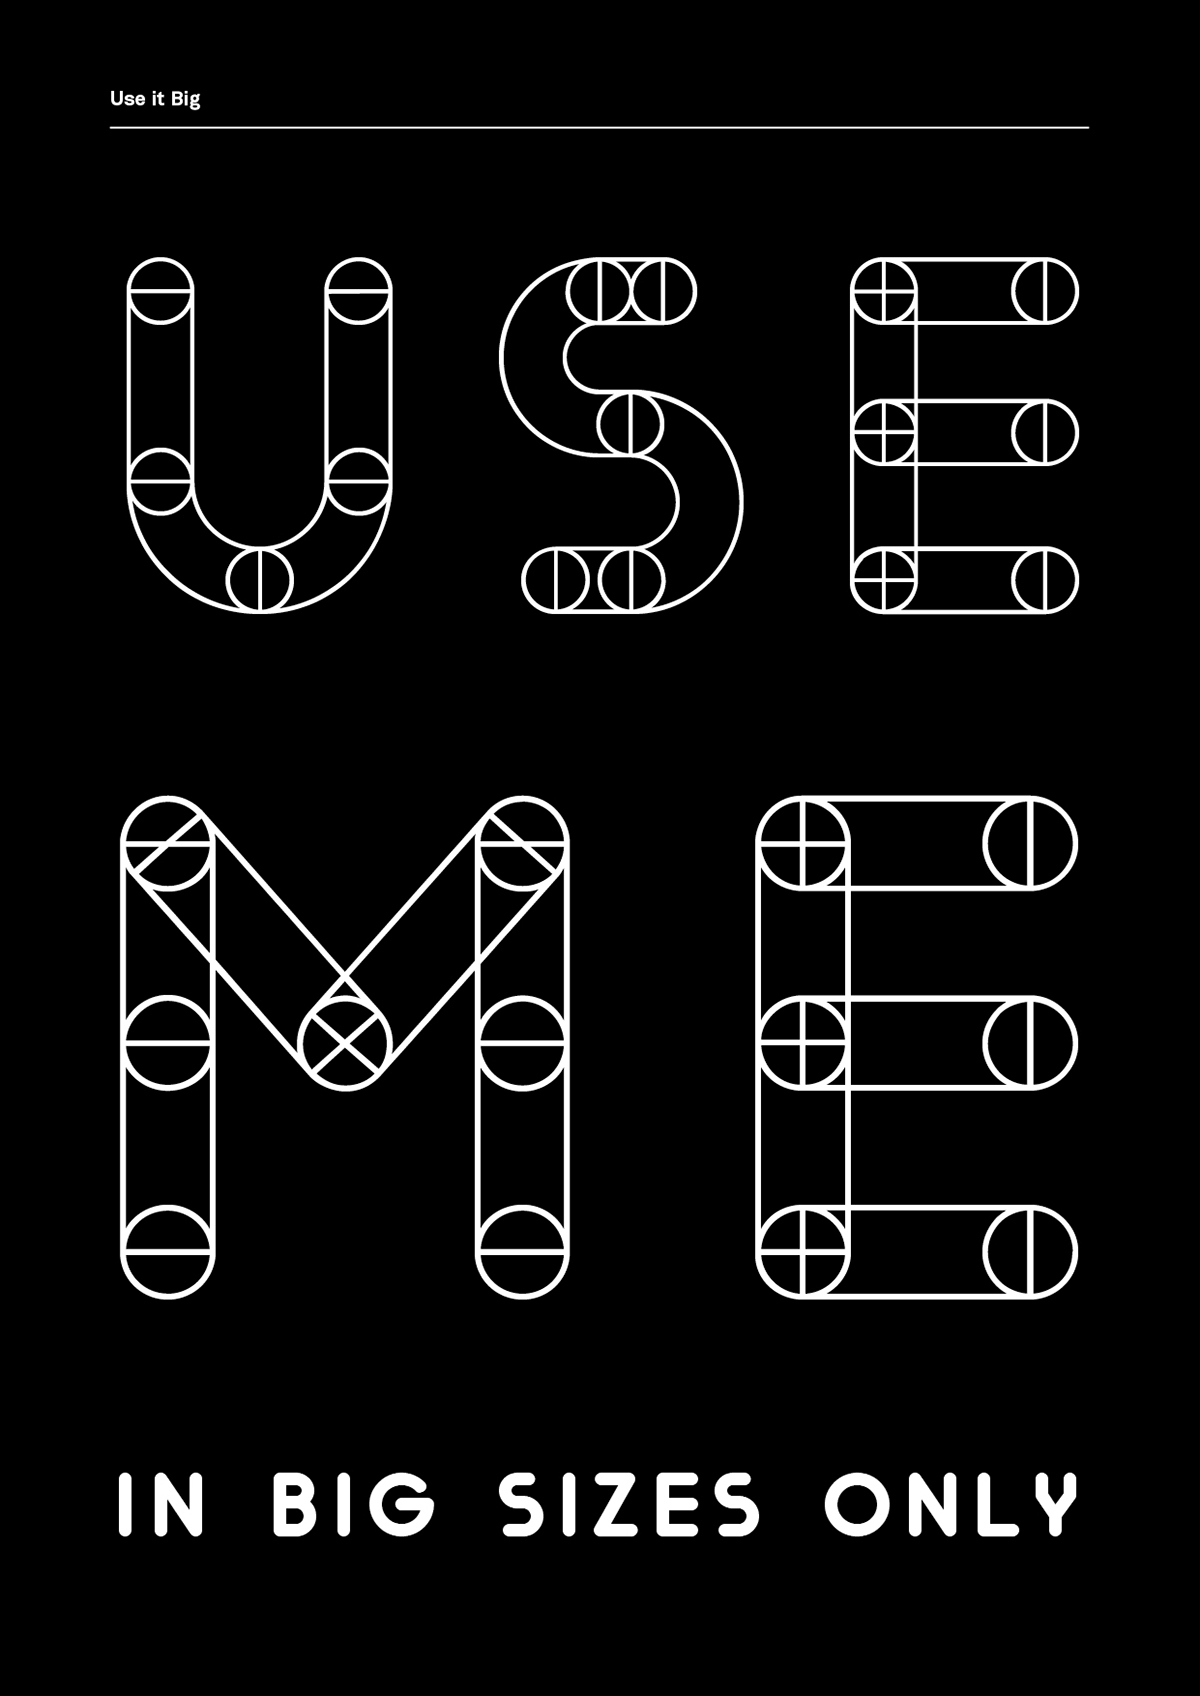 font type Typeface ultratypes barcelona modular Rotula system visible transparent grid experimental module Display tipografia